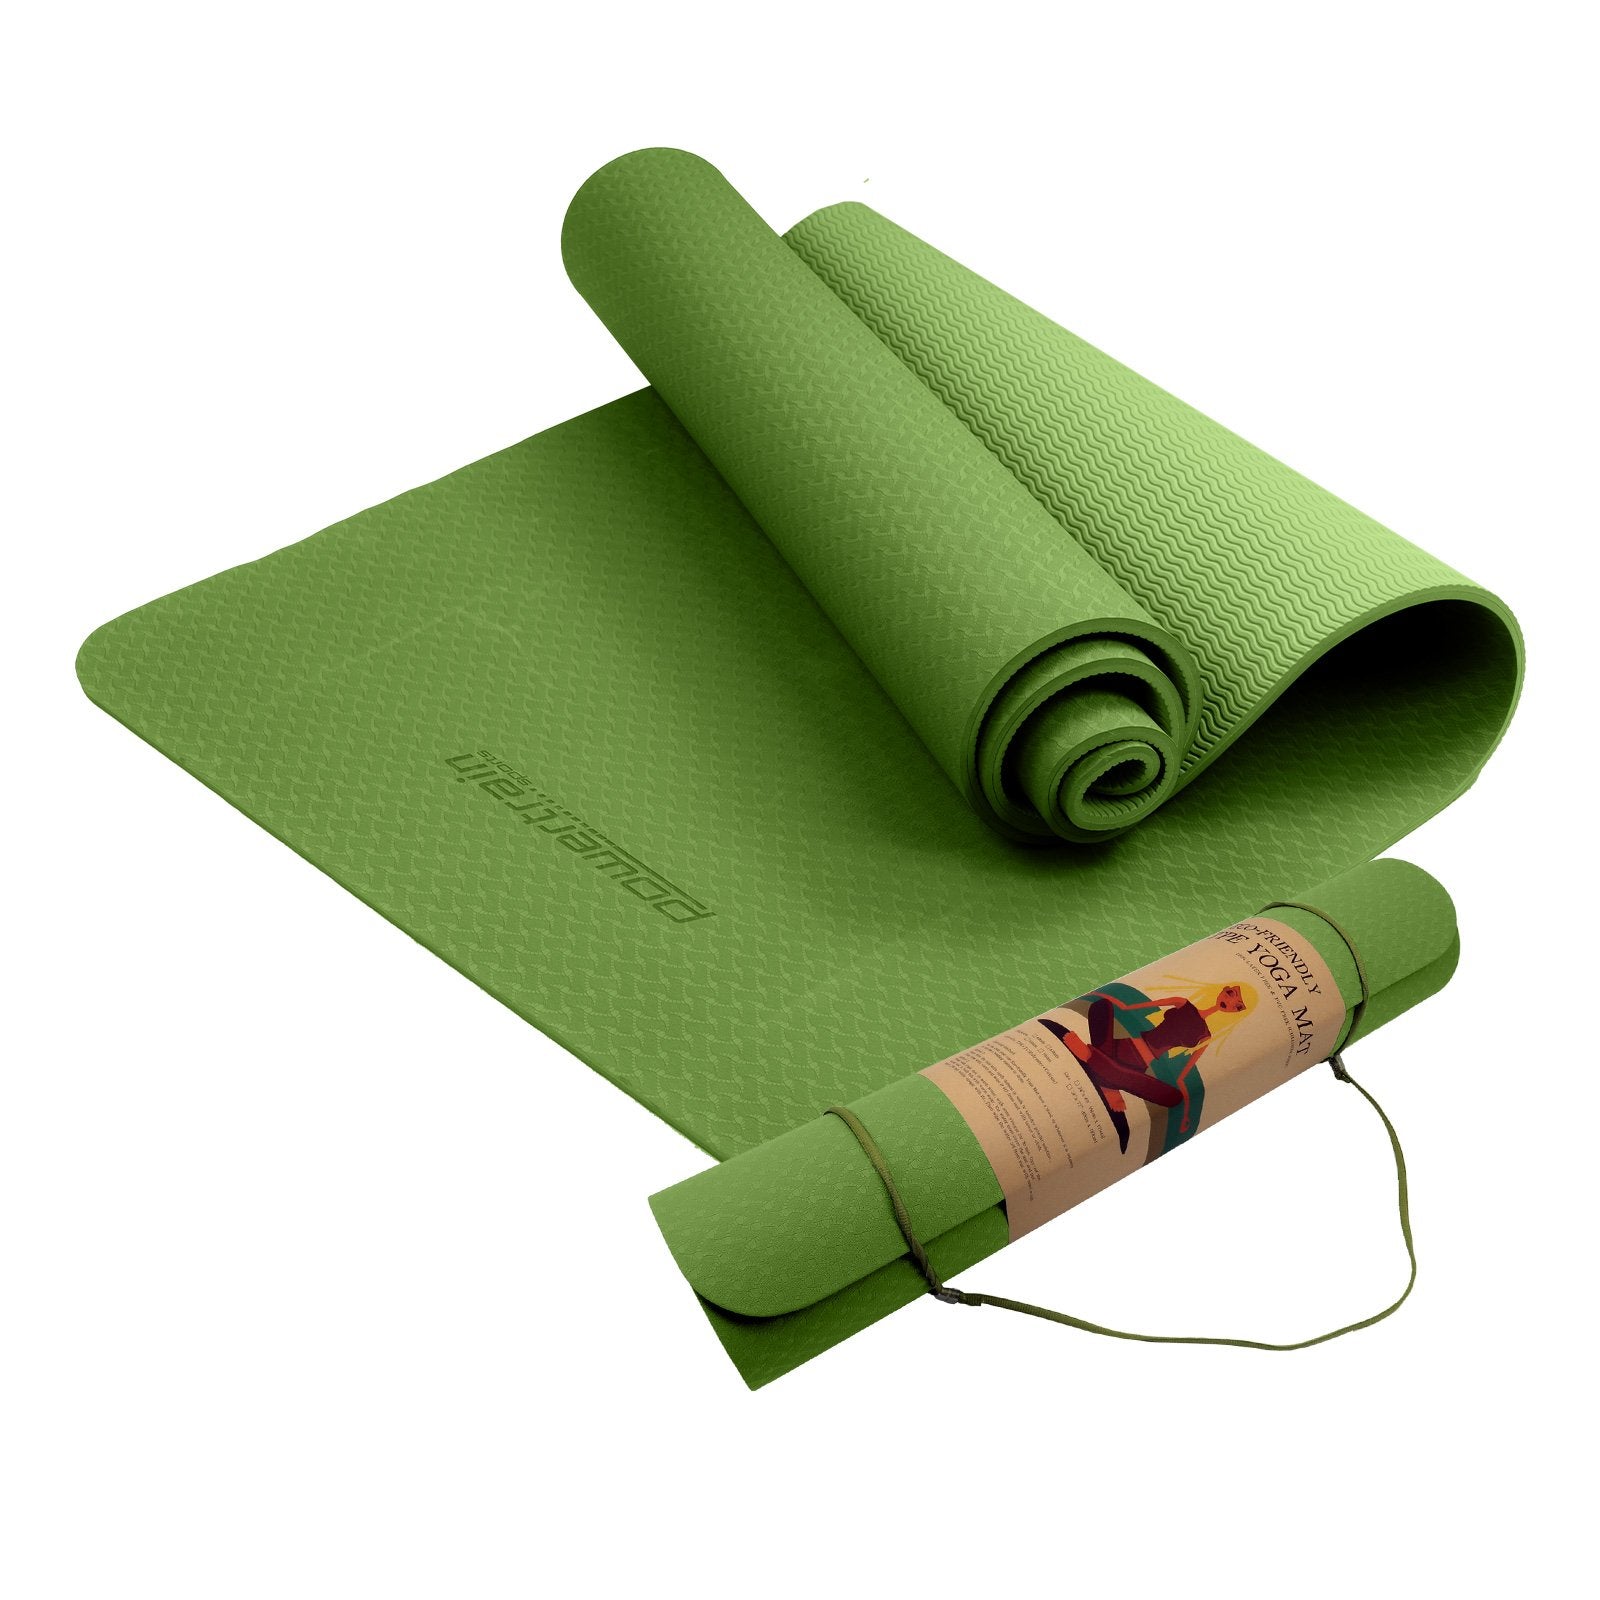 Kulae 4mm ECOmat Yoga Mat - Eco-Friendly, Reversible, Lightweight